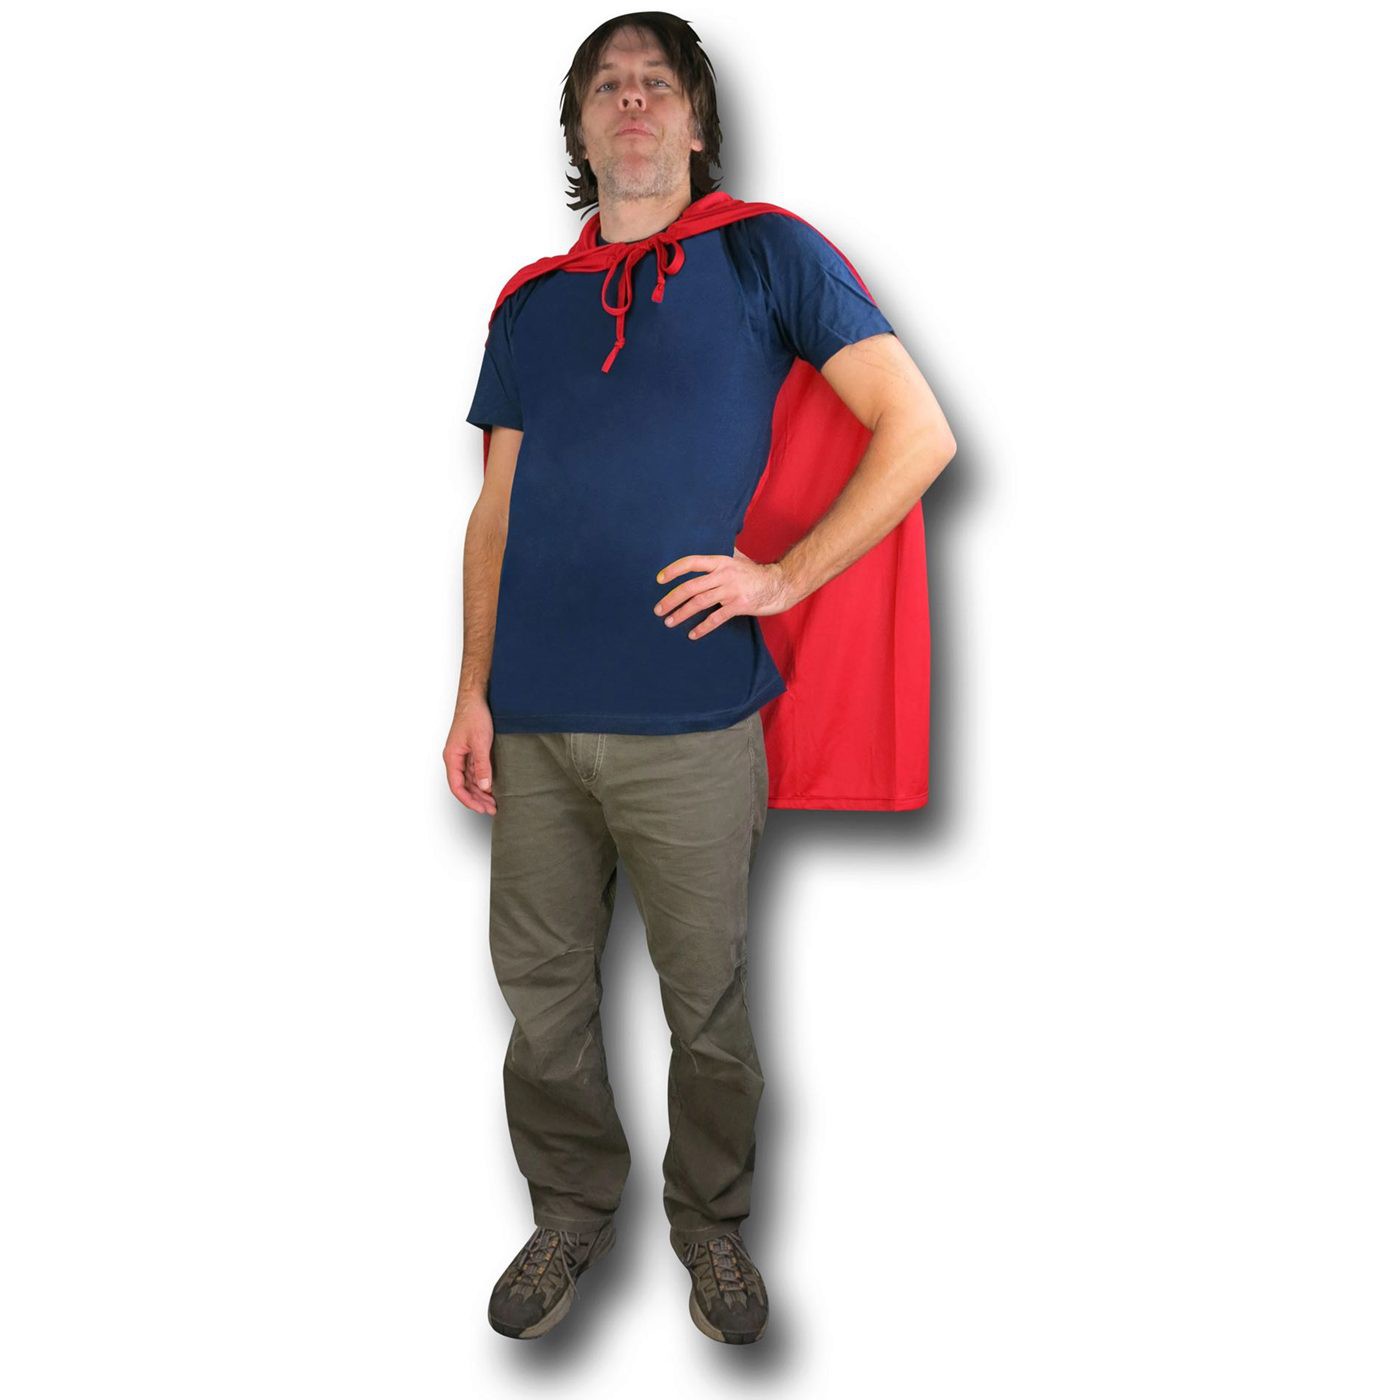 Red Superhero Cape